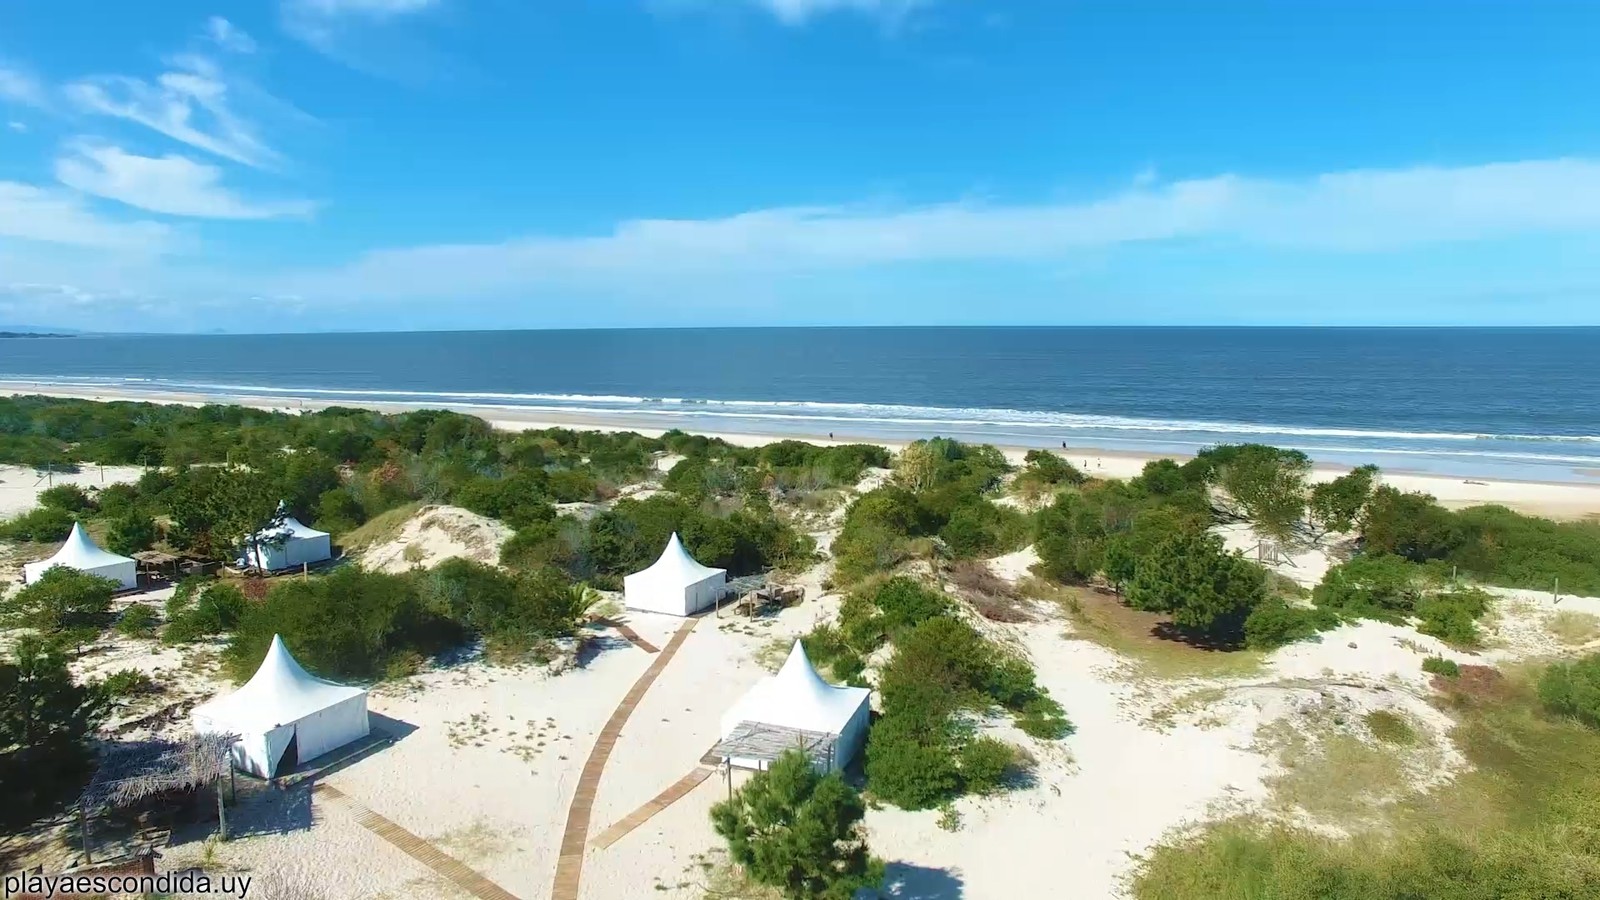 Alojamiento Playa Escondida Uruguay